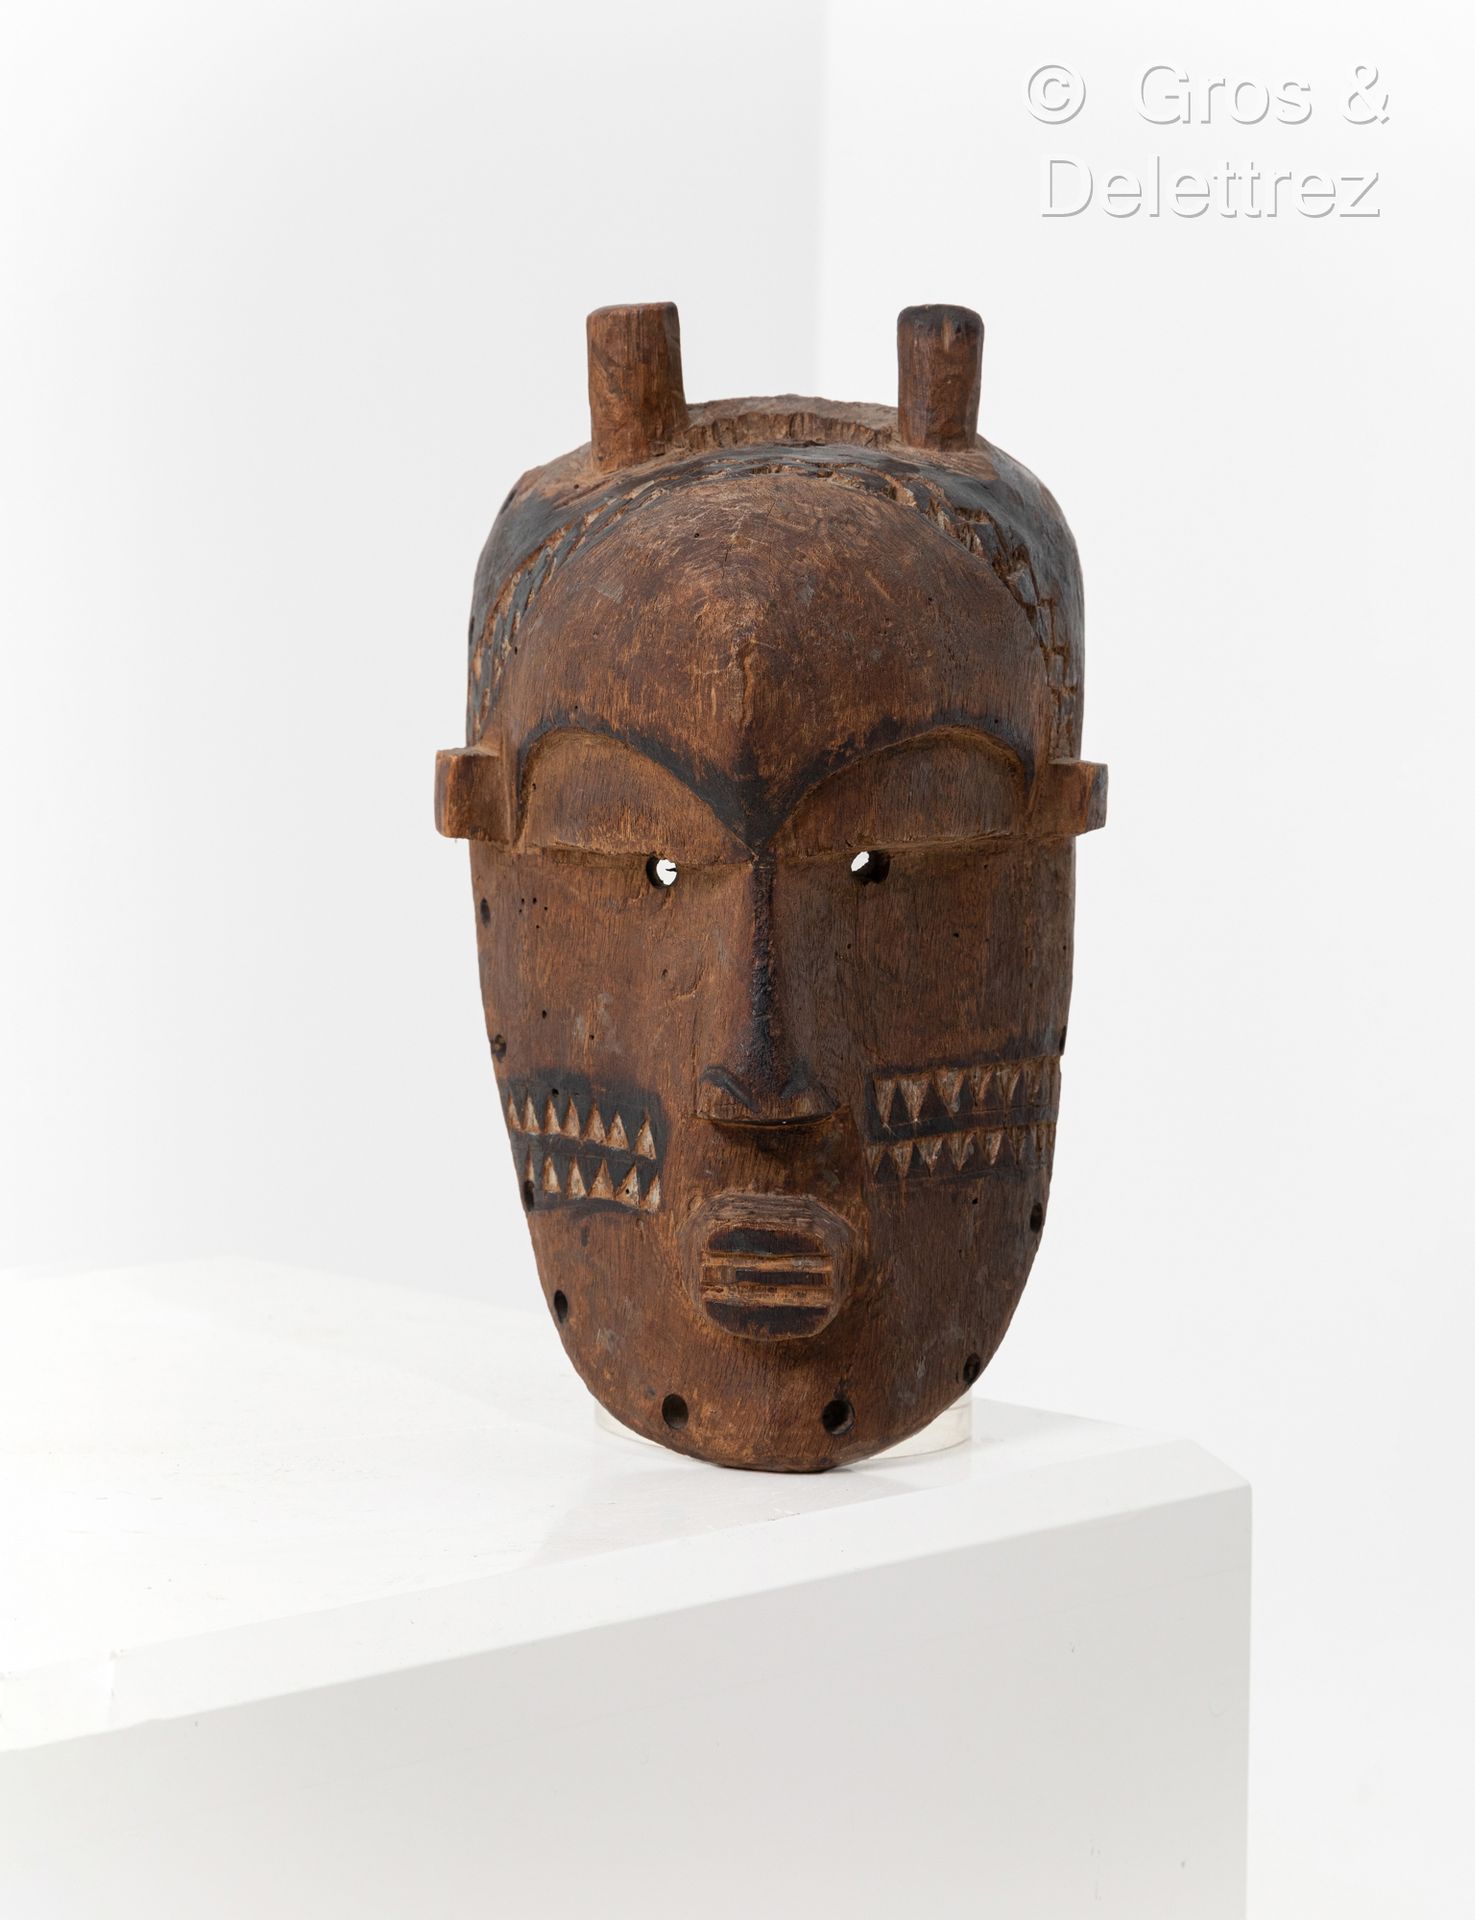 Null 面具。
Biombo人，刚果民主共和国。
木头，颜料。
高：28厘米 - 宽：15厘米

出处： 
私人收藏，土伦